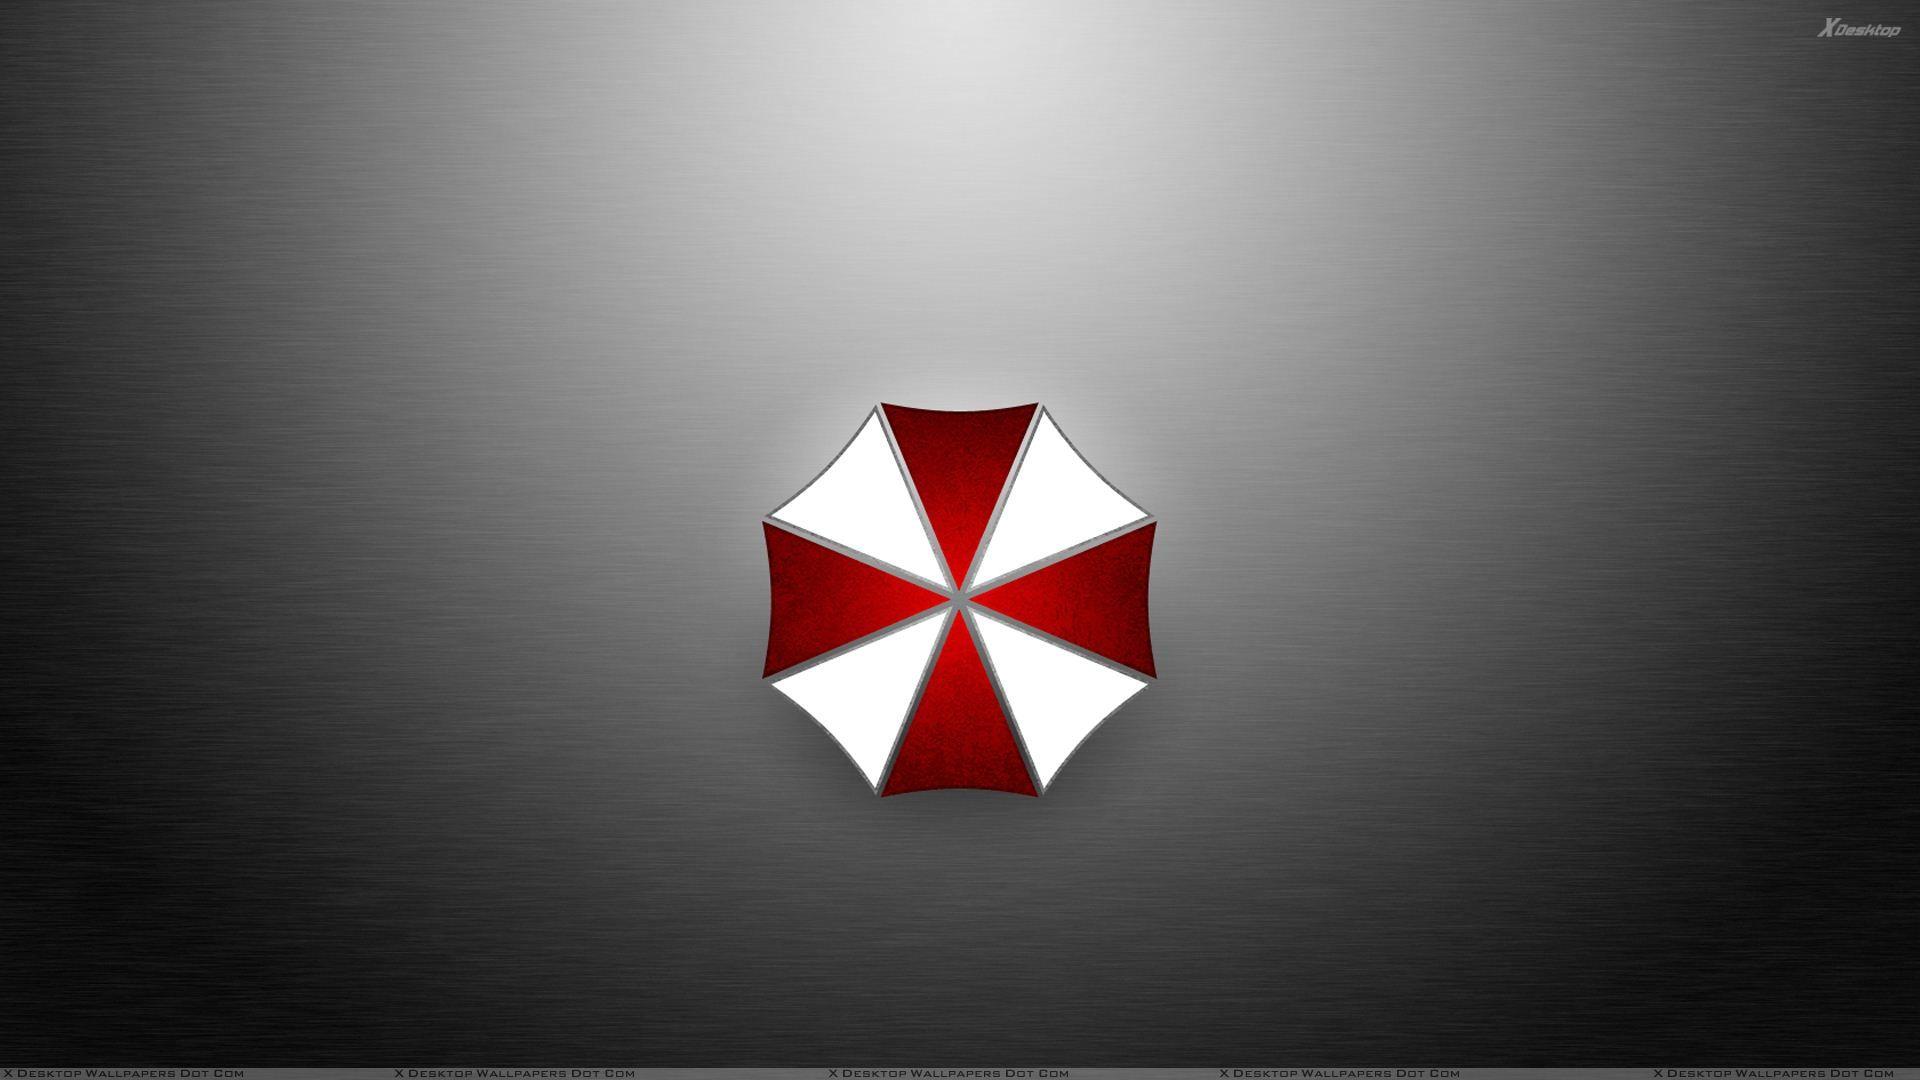 Umbrella Desktop Wallpapers - Top Free Umbrella Desktop Backgrounds ...